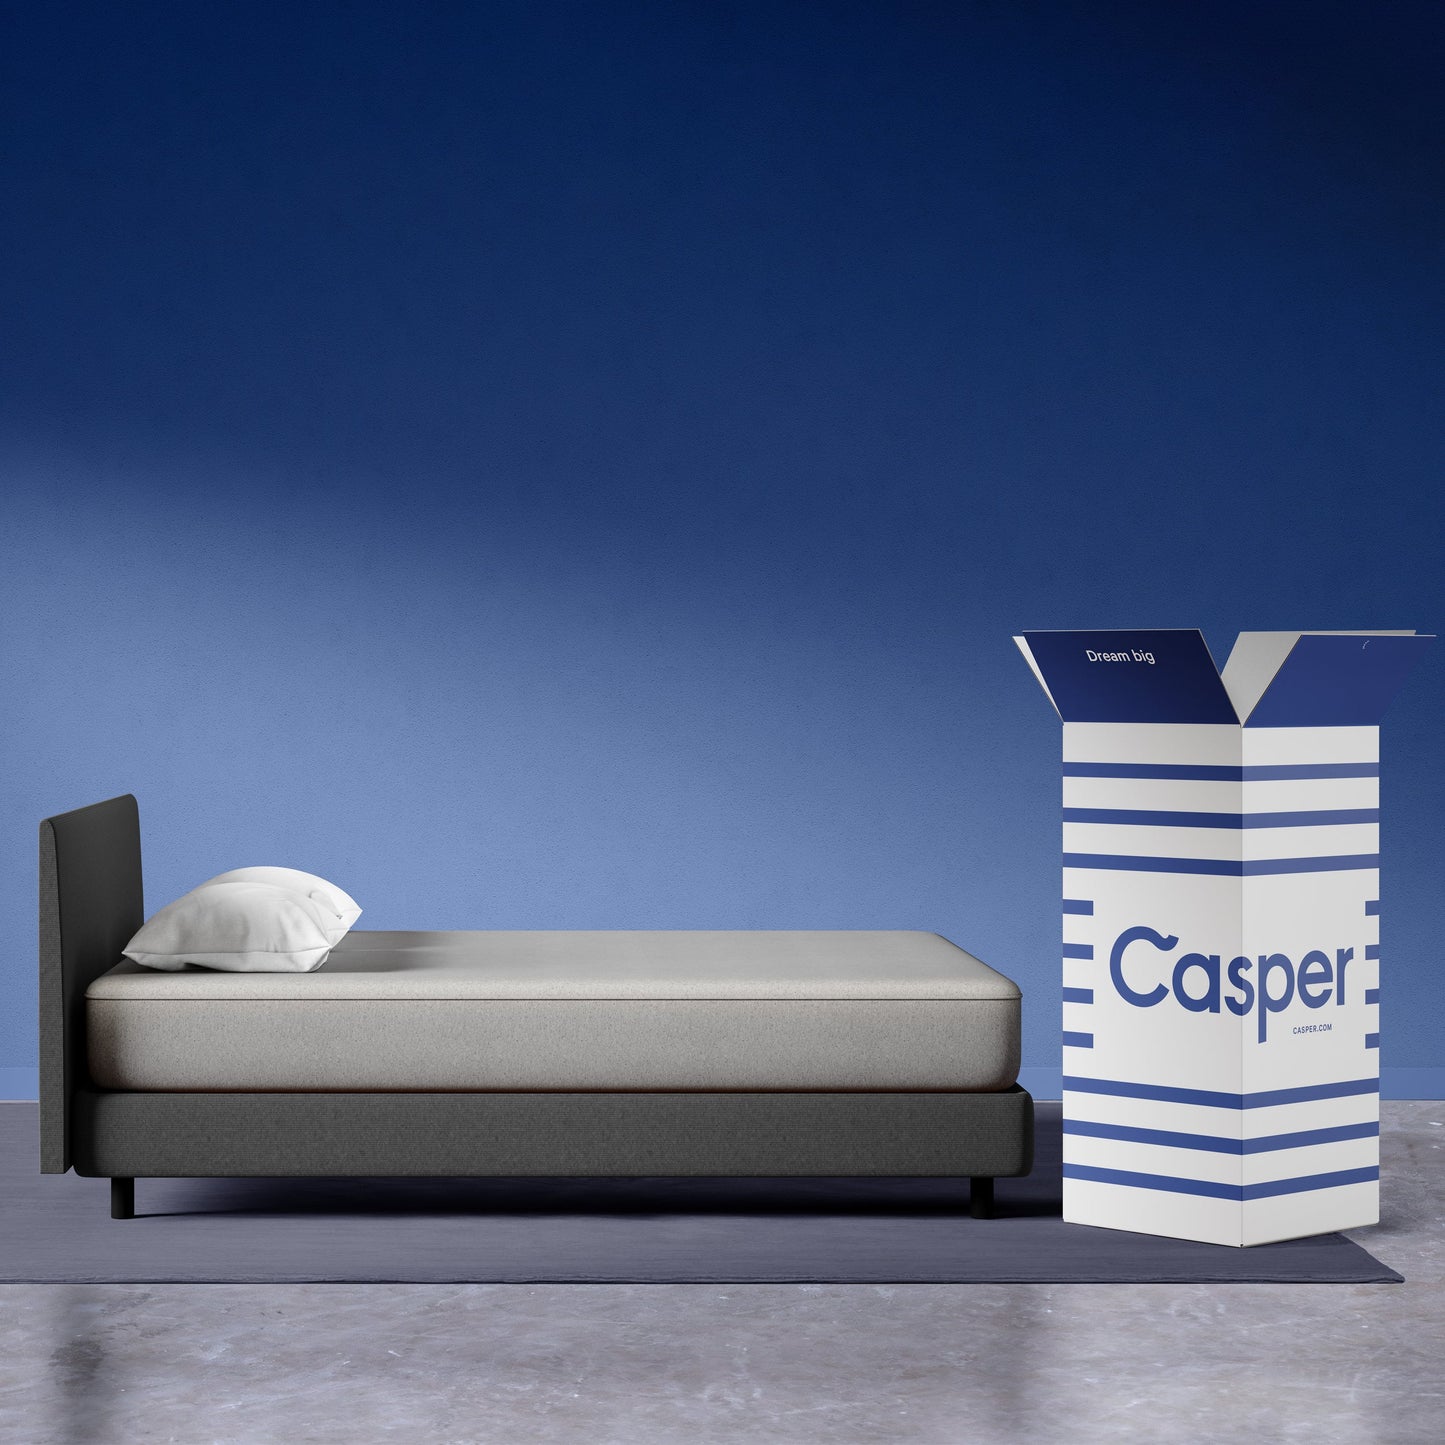 The Casper Mattress And Shipping Box